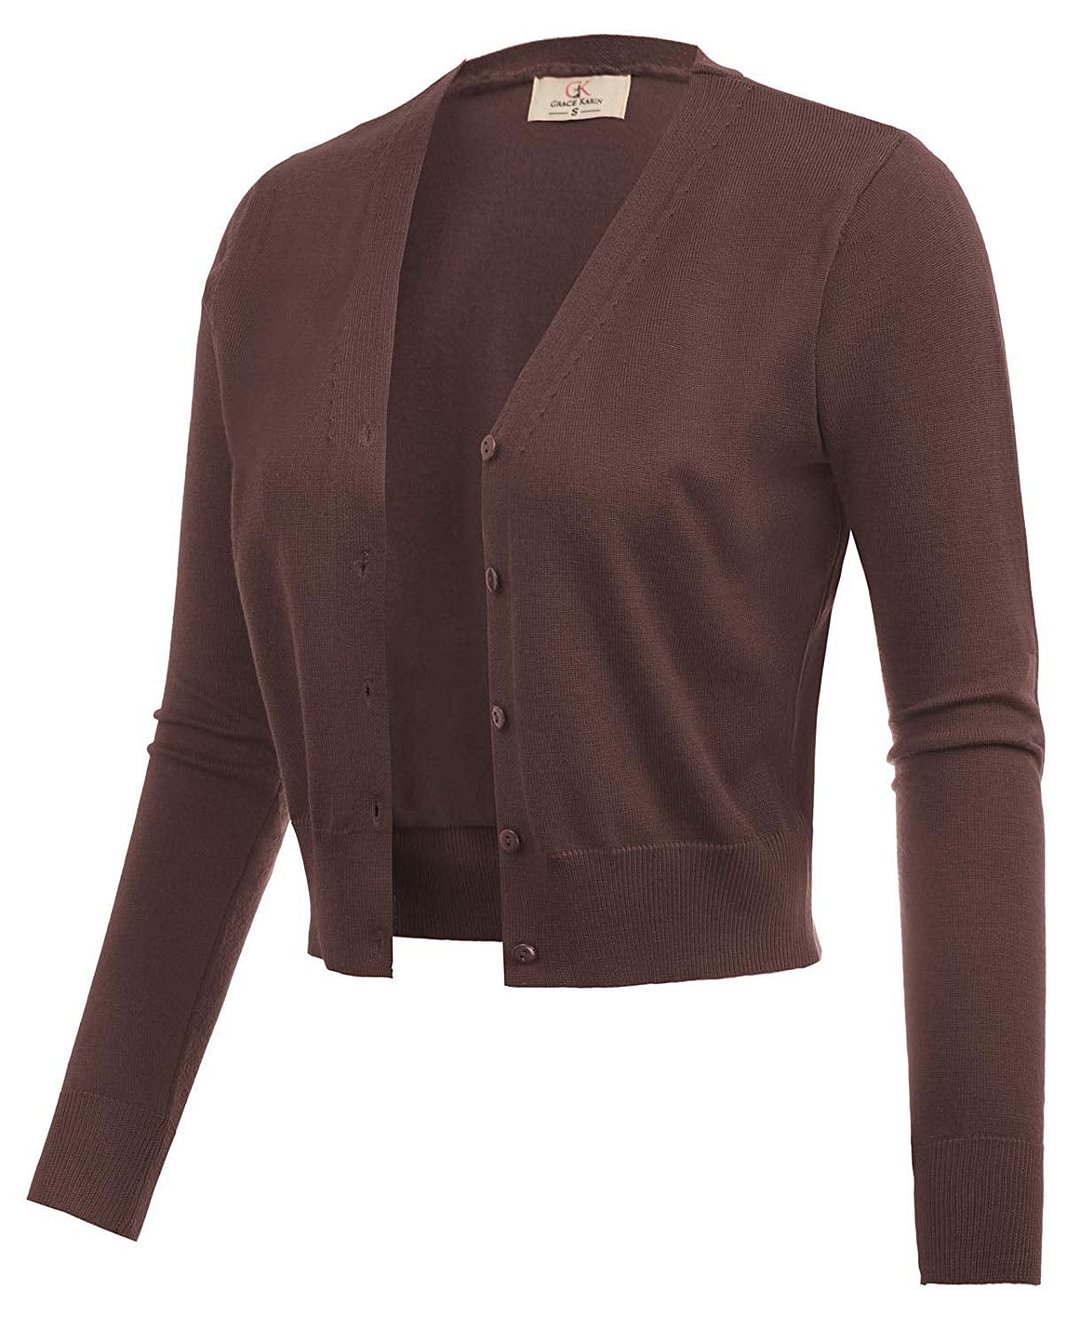 Women's Open Front Knit Cropped Bolero Shrug Cardigan Sweater Long Sleeve (S-4XL)